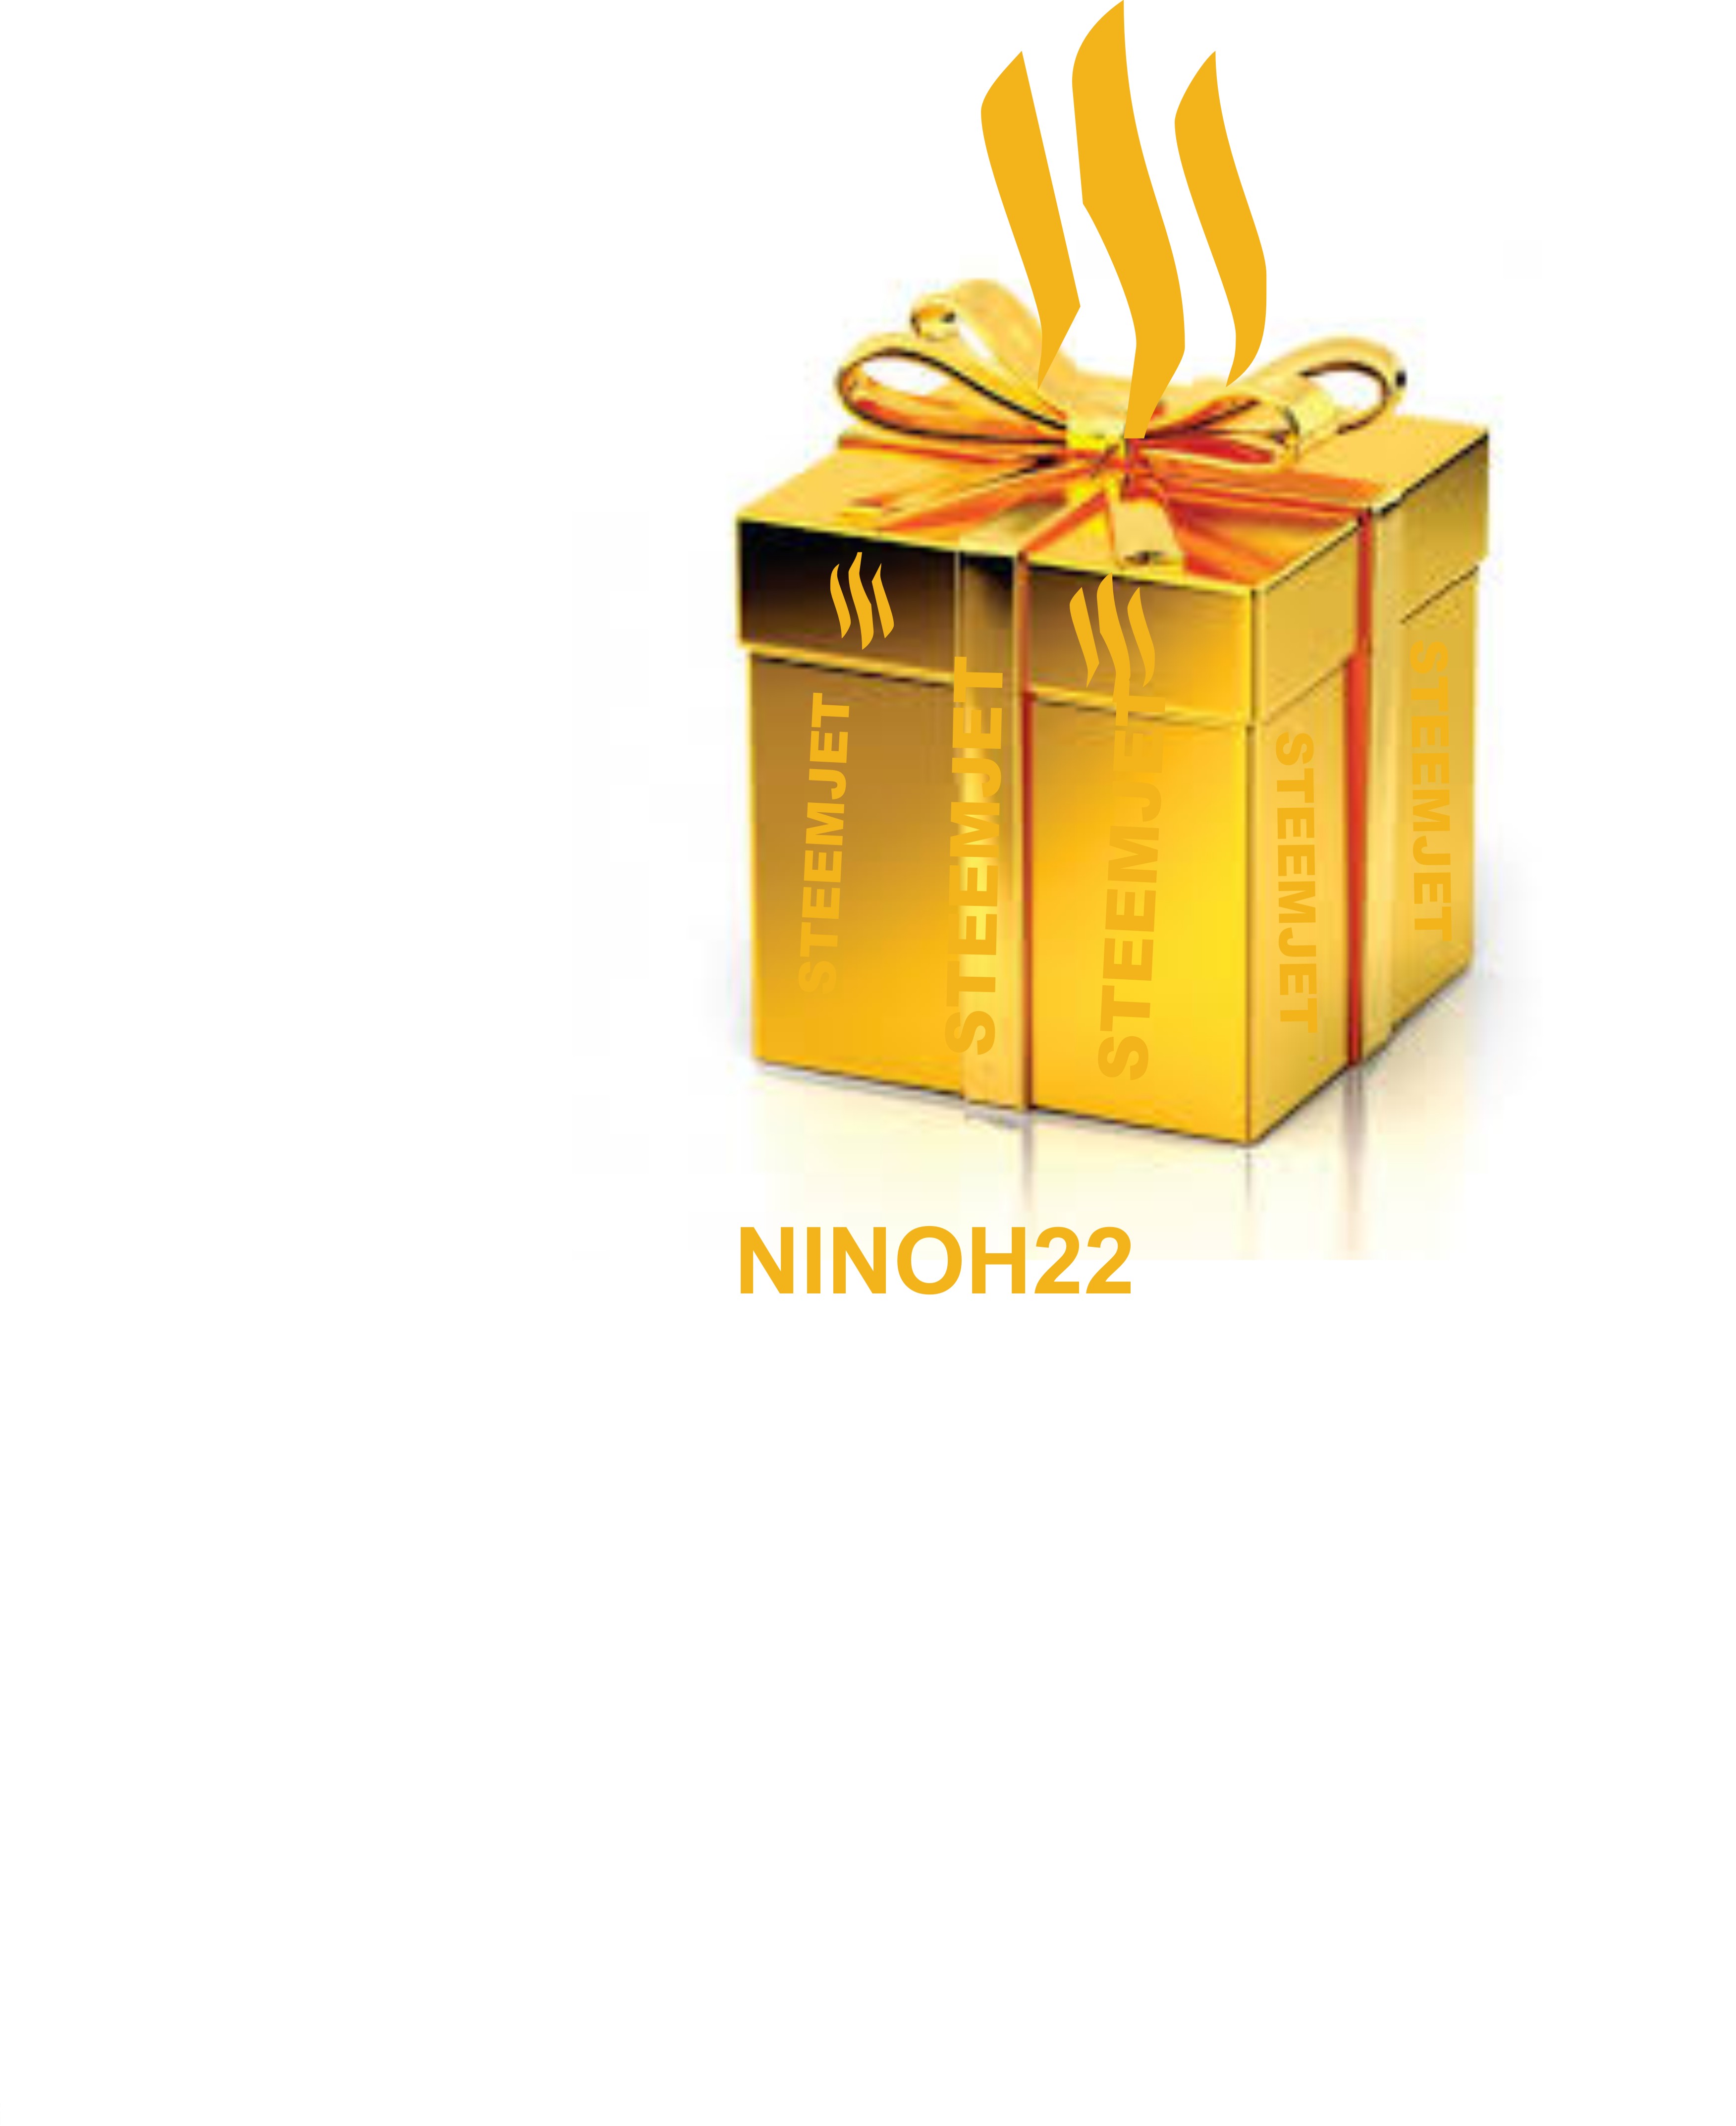 NINOH22 GOLD GIFT.jpg